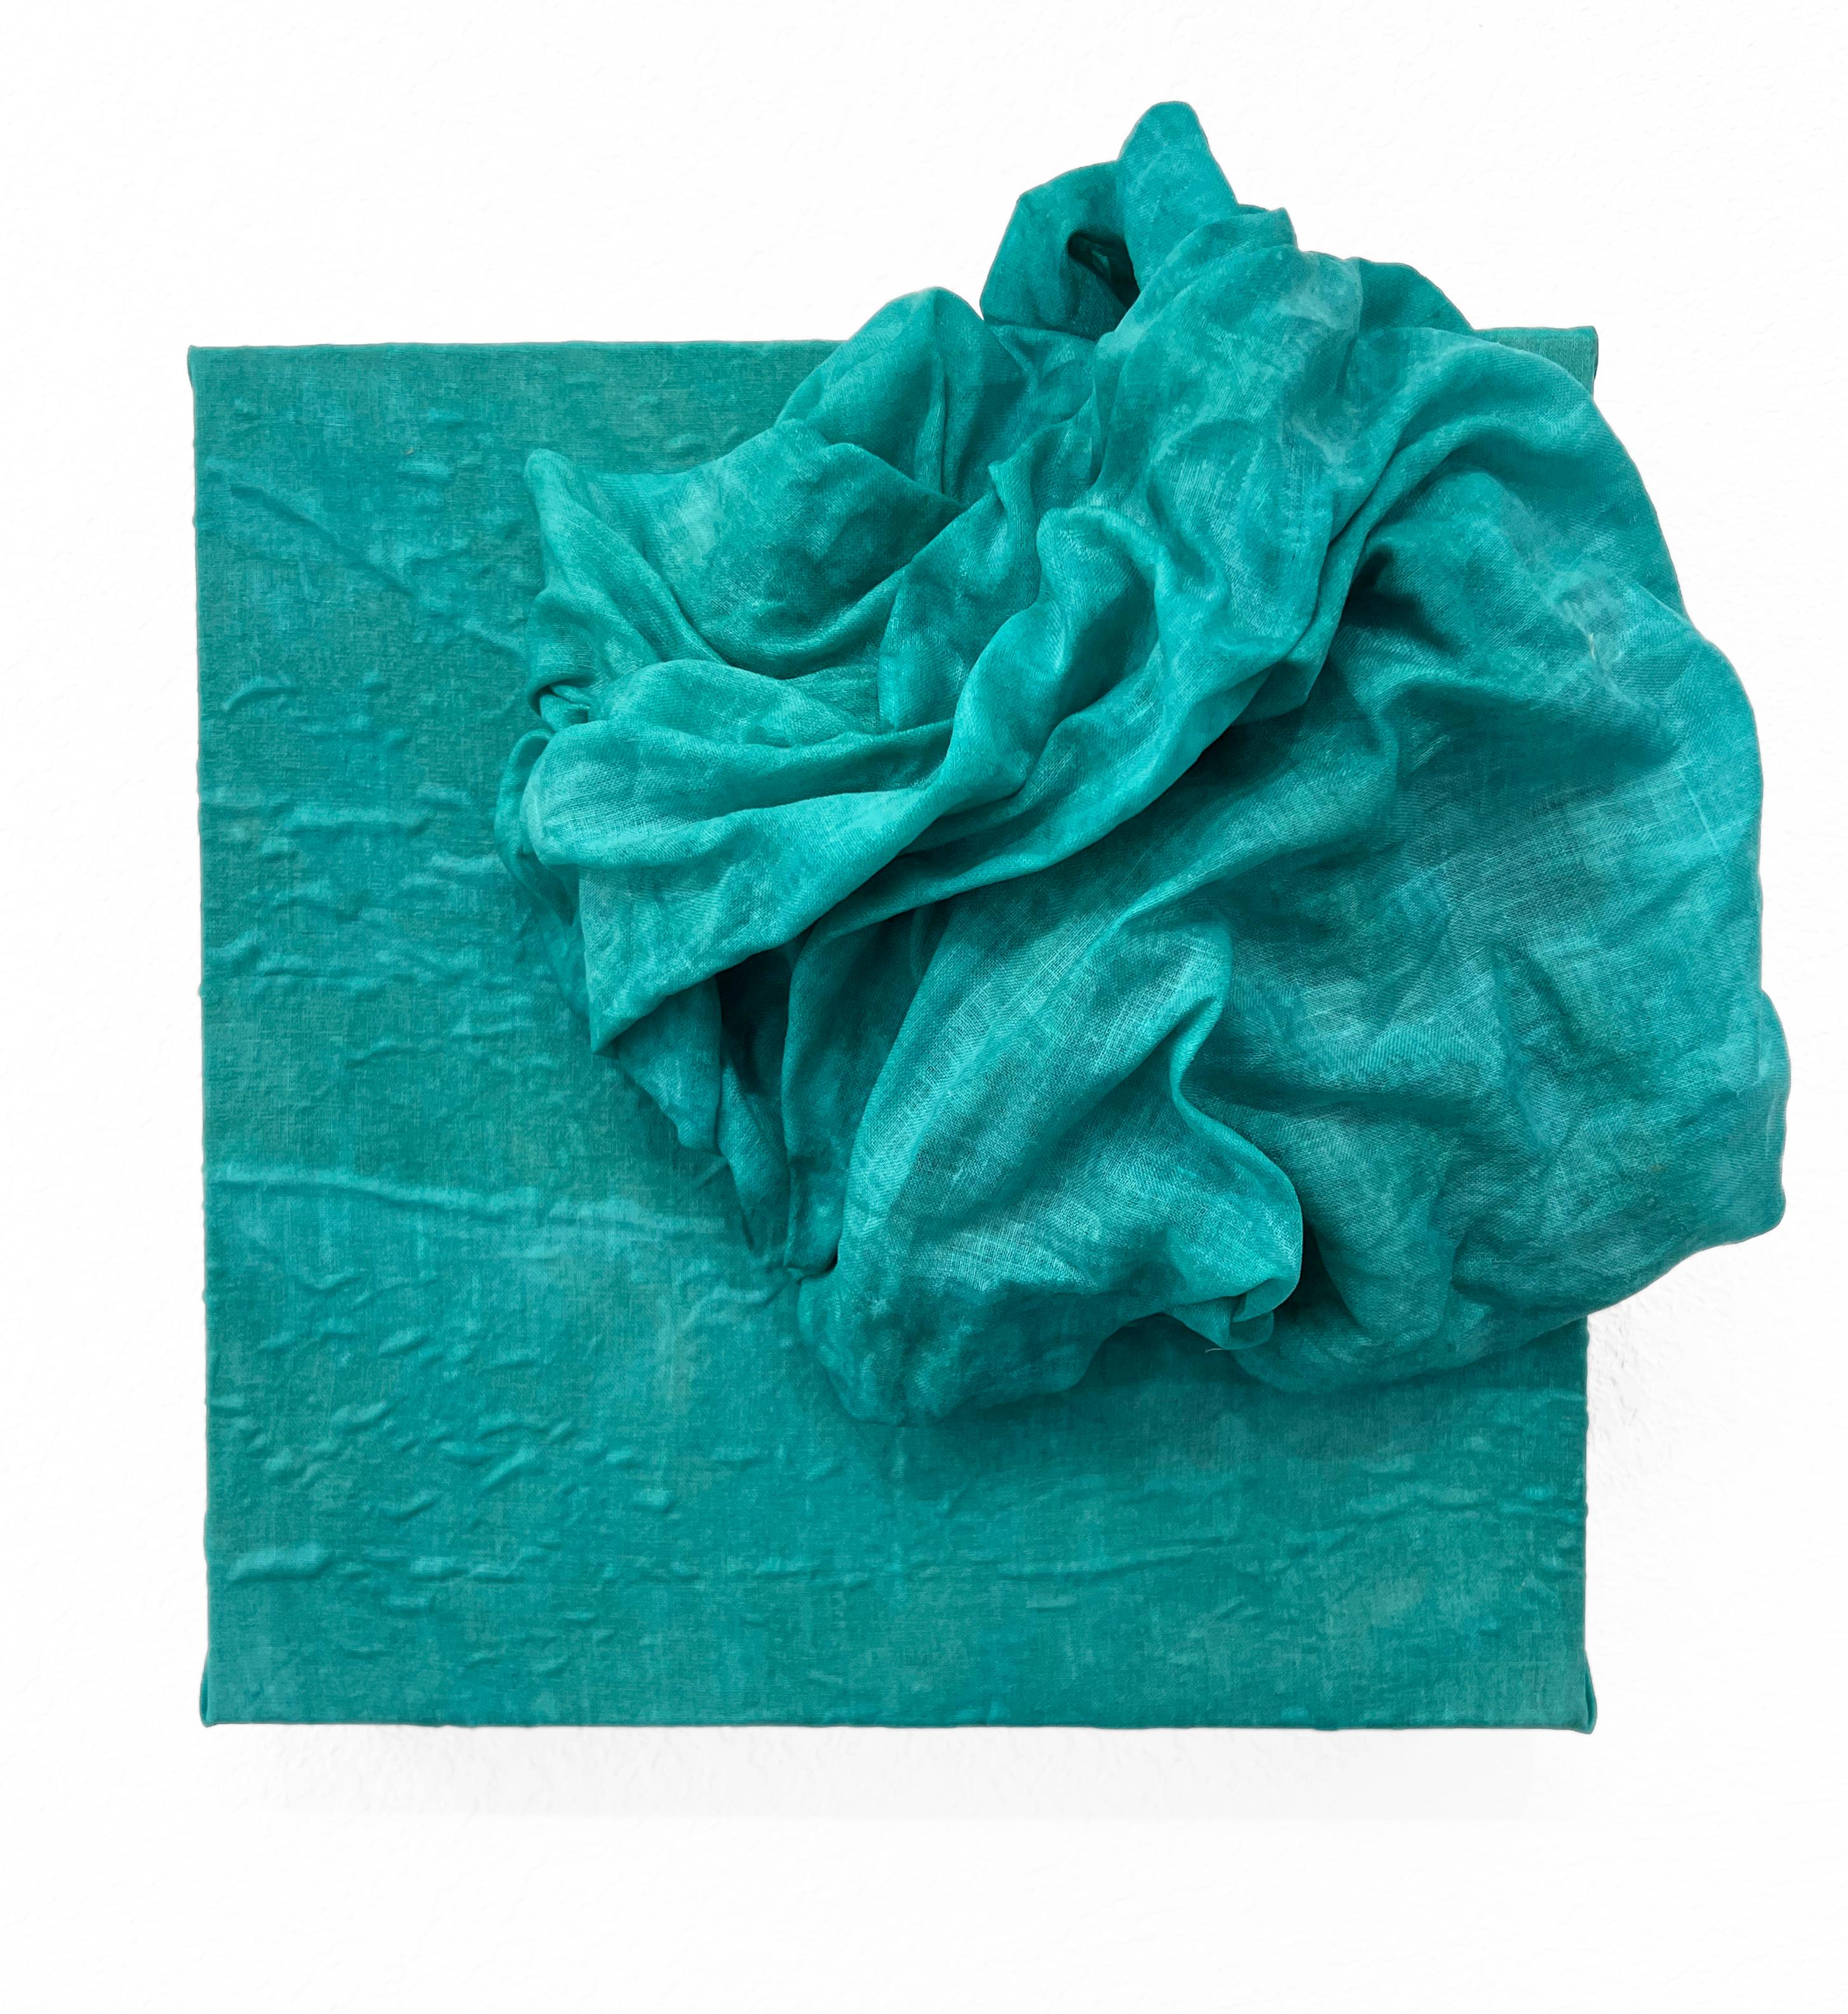 Chloe Hedden Abstract Sculpture - "Celadon 3" Wall sculpture- fabric, monochrome, monochromatic, elegant, bold